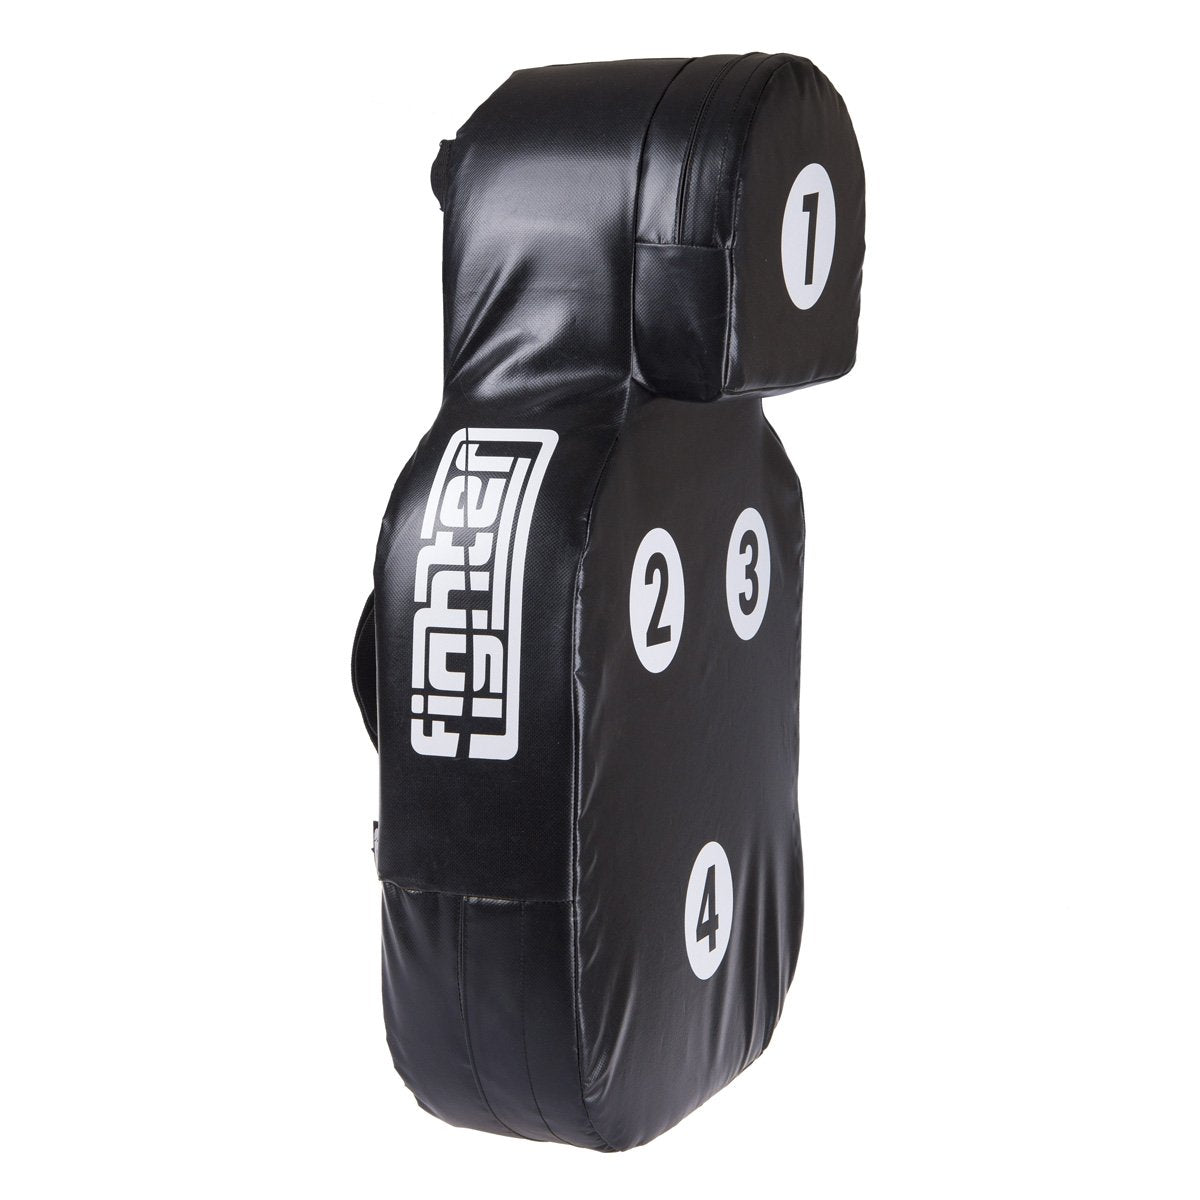 Fighter Body Shield Kicking Shield - black